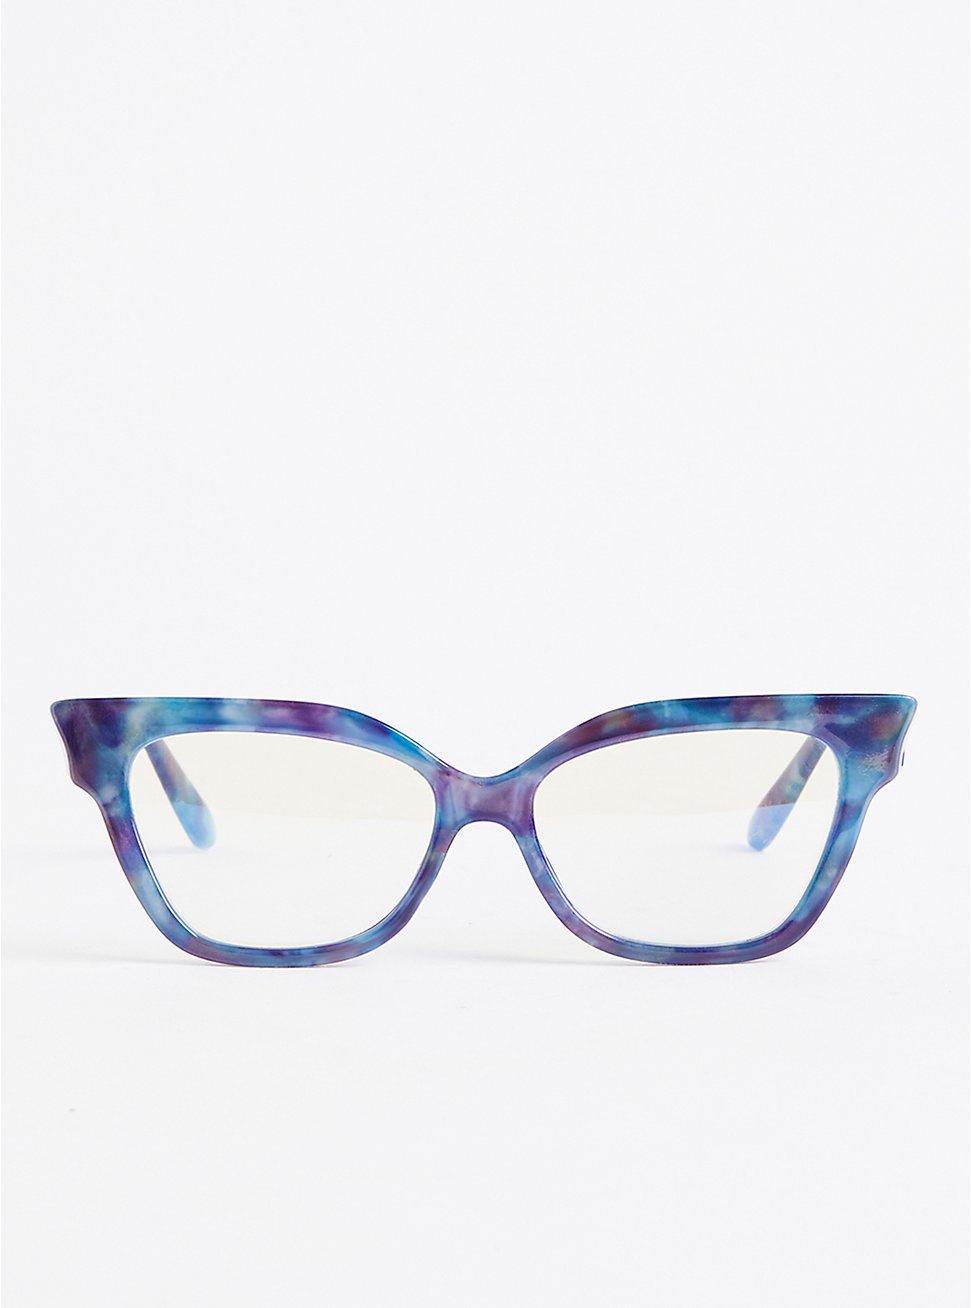 Blue Light Glasses - Multi Blue, , hi-res